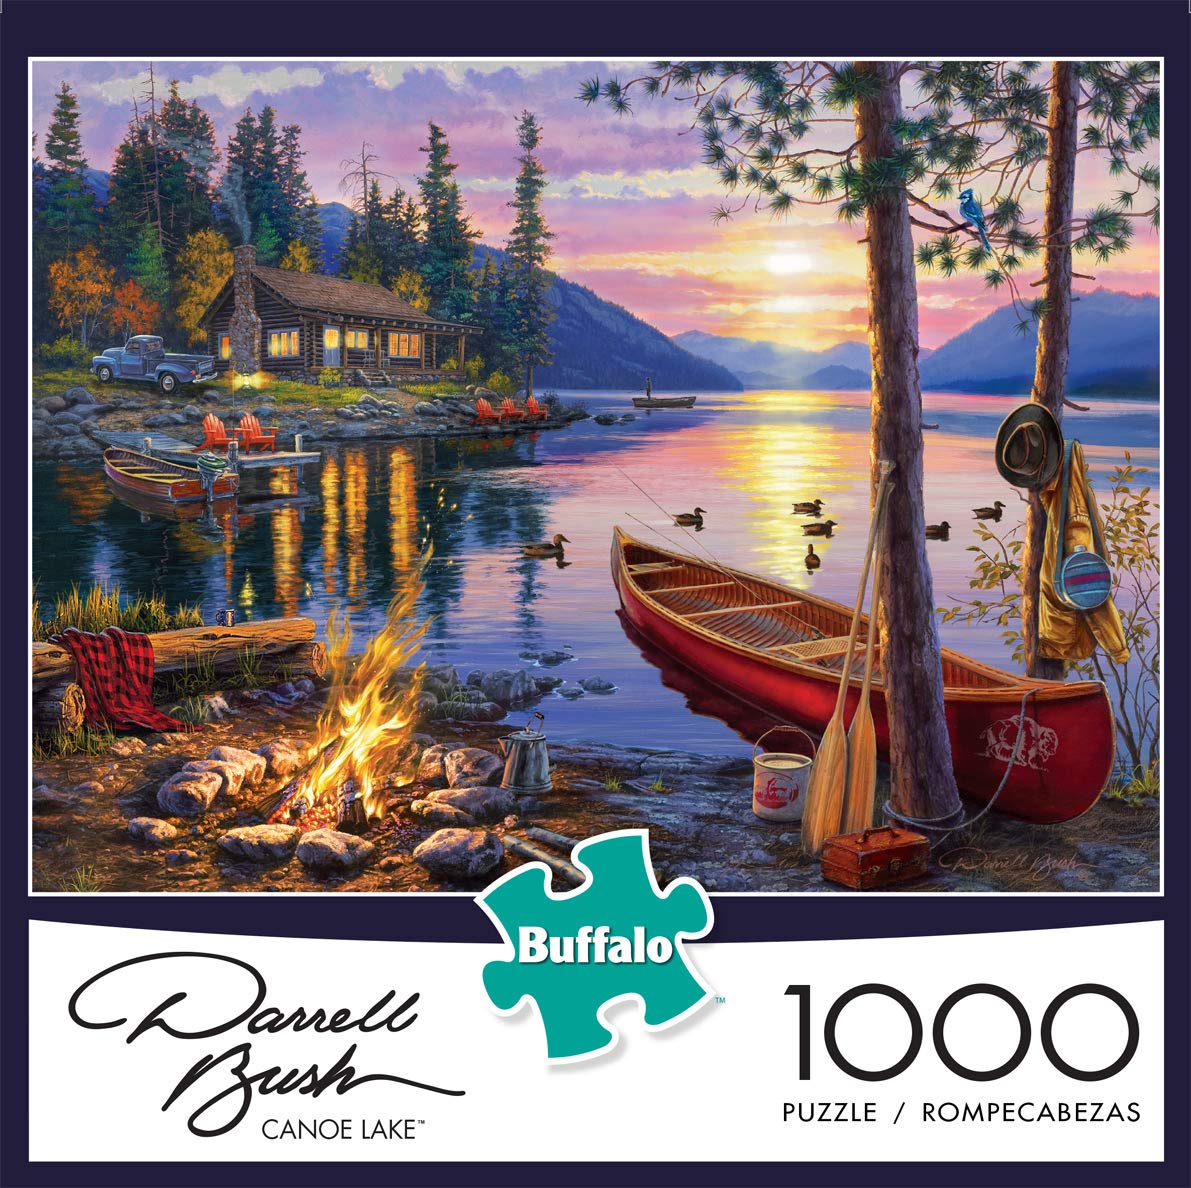 Buffalo Games - Darrell Bush - Canoe Lake - 1000 Piece Jigsaw Puzzle